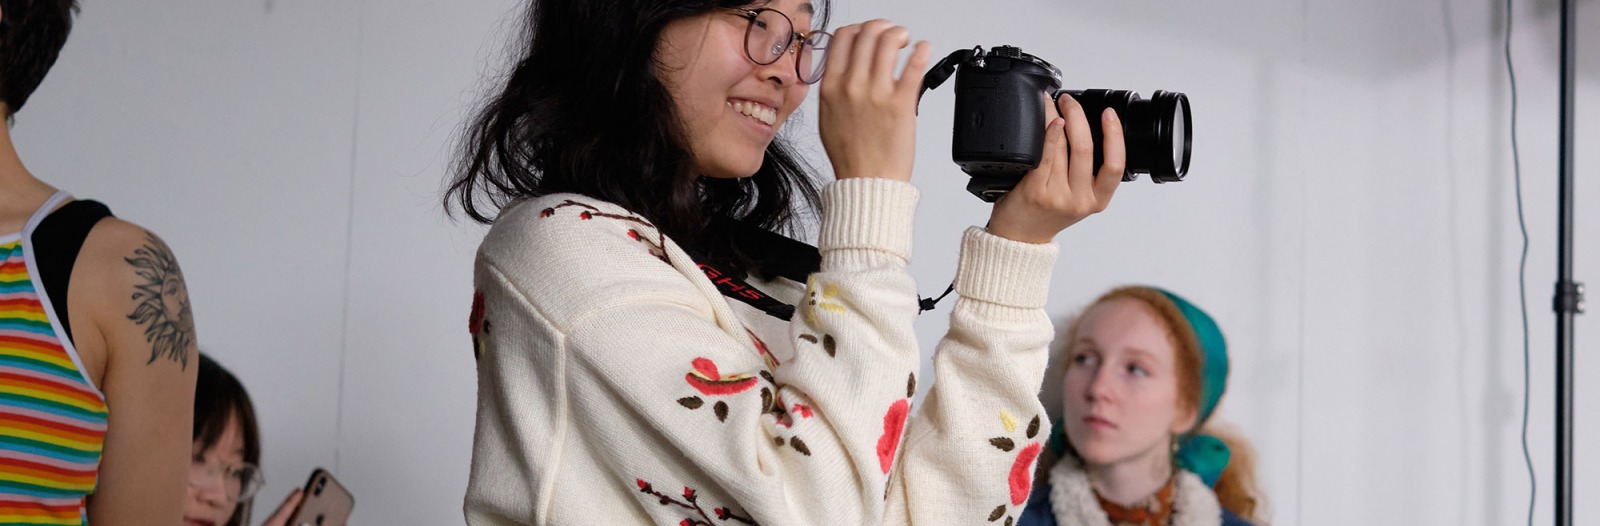 Nana Okamoto ’20 looks through the camera during Fundamentals of Video Production class